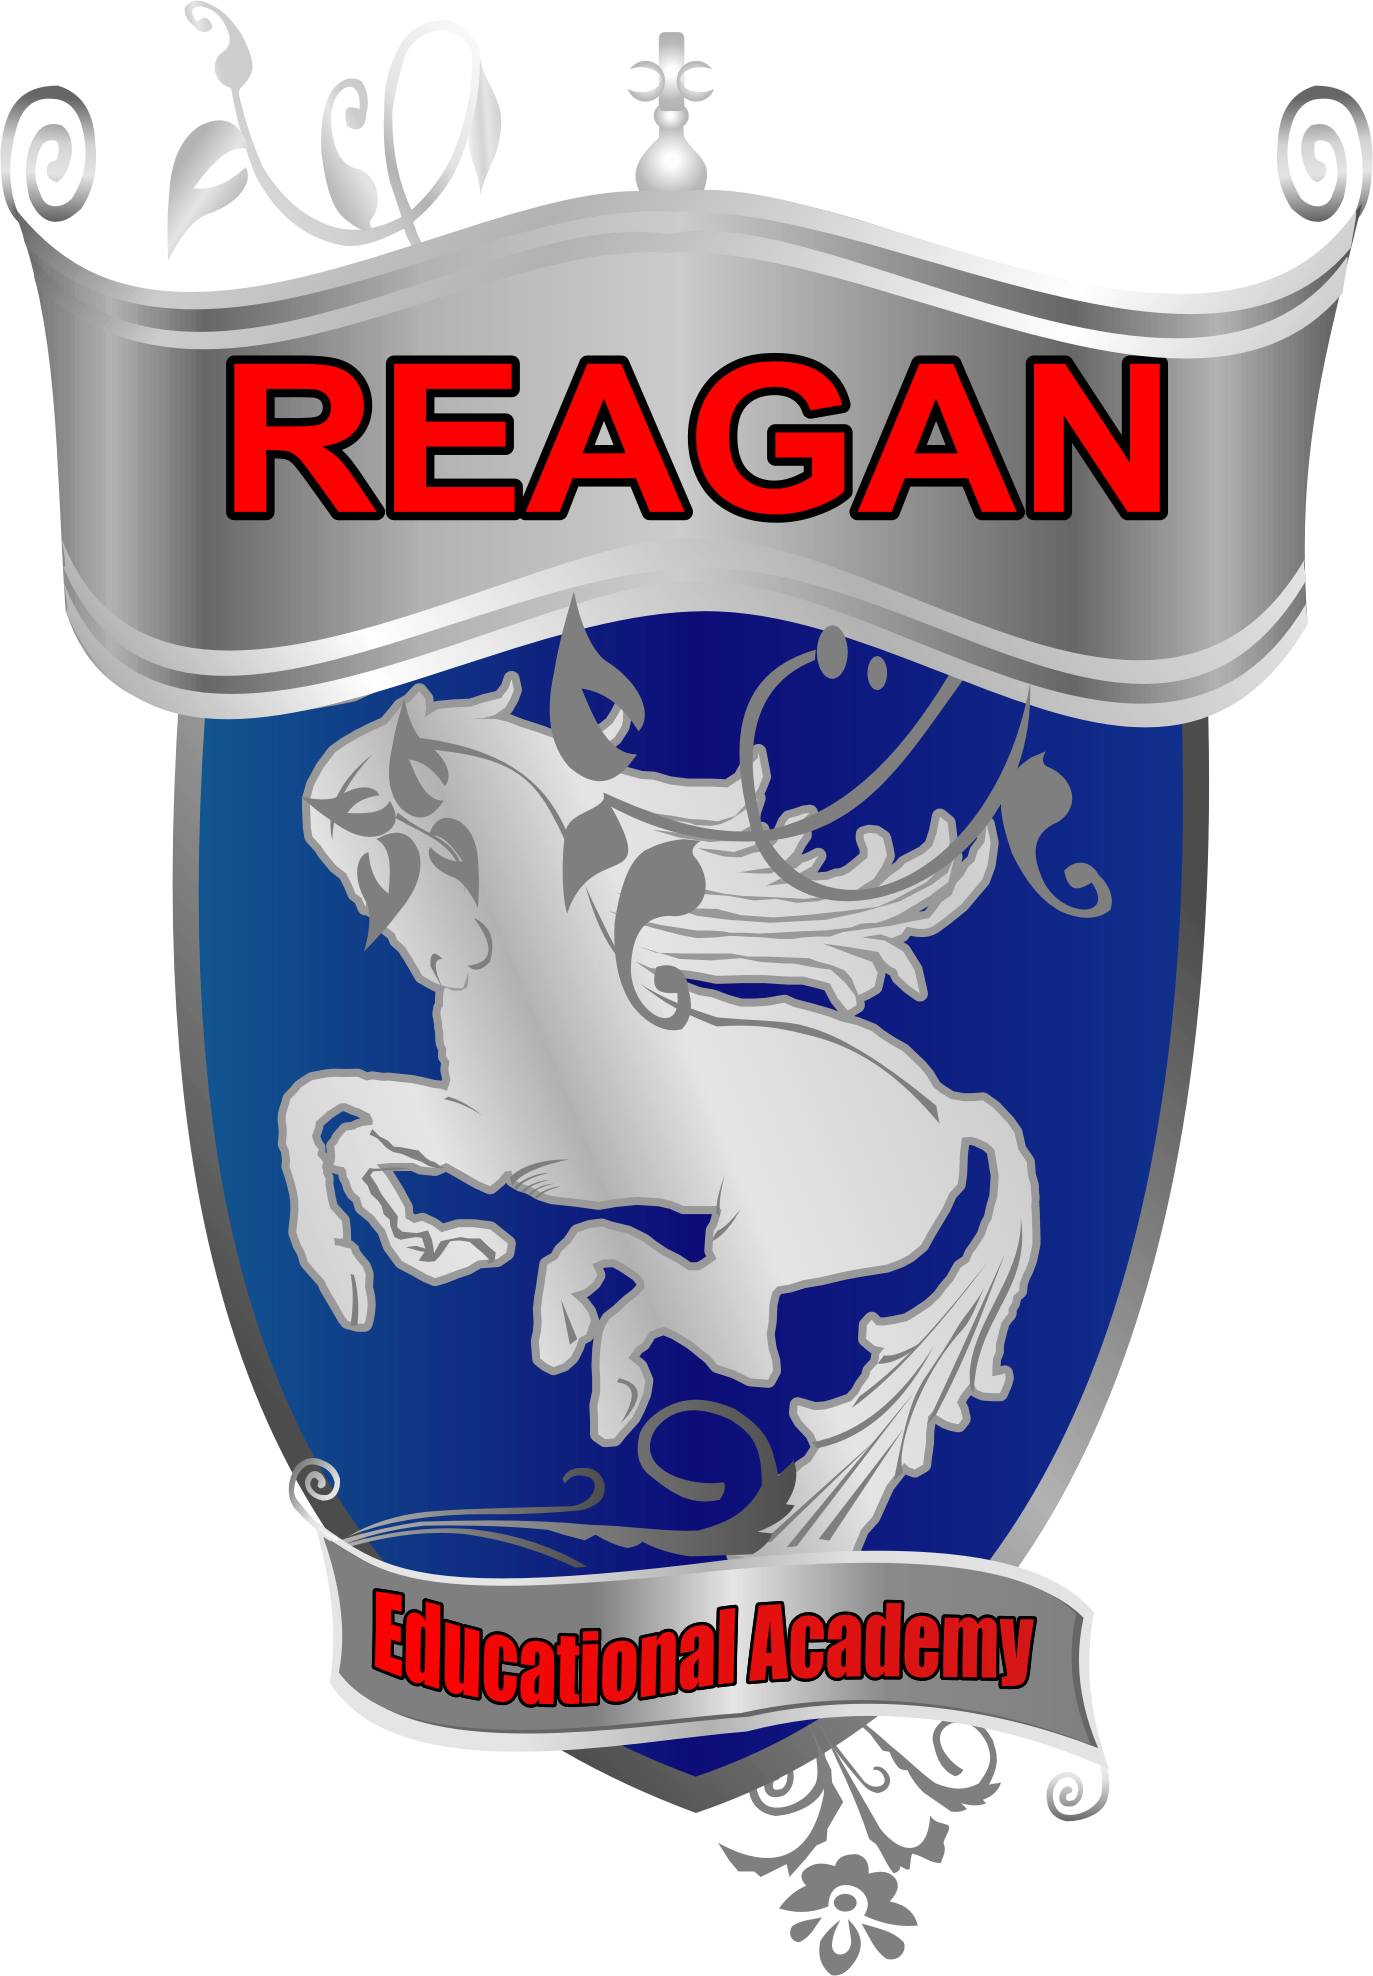 Reagan Educational Academy Inc  logo